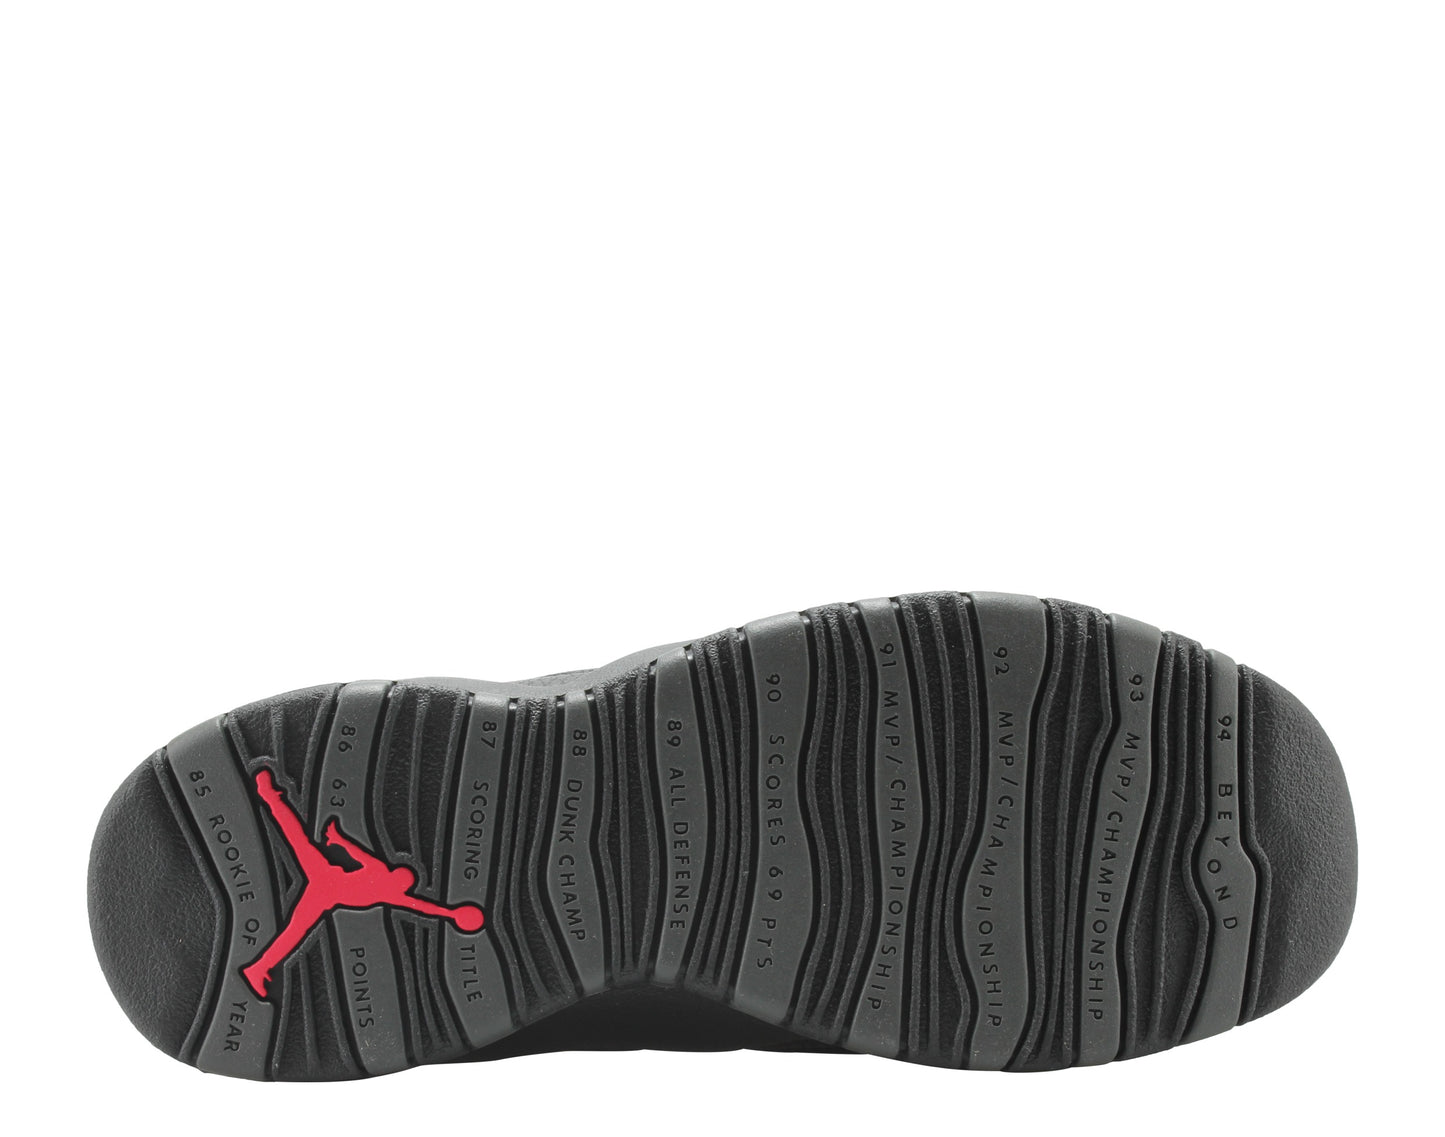 Nike Air Jordan 10 Retro (GS) BG Dark Shadow Boys Basketball Shoes 310806-002